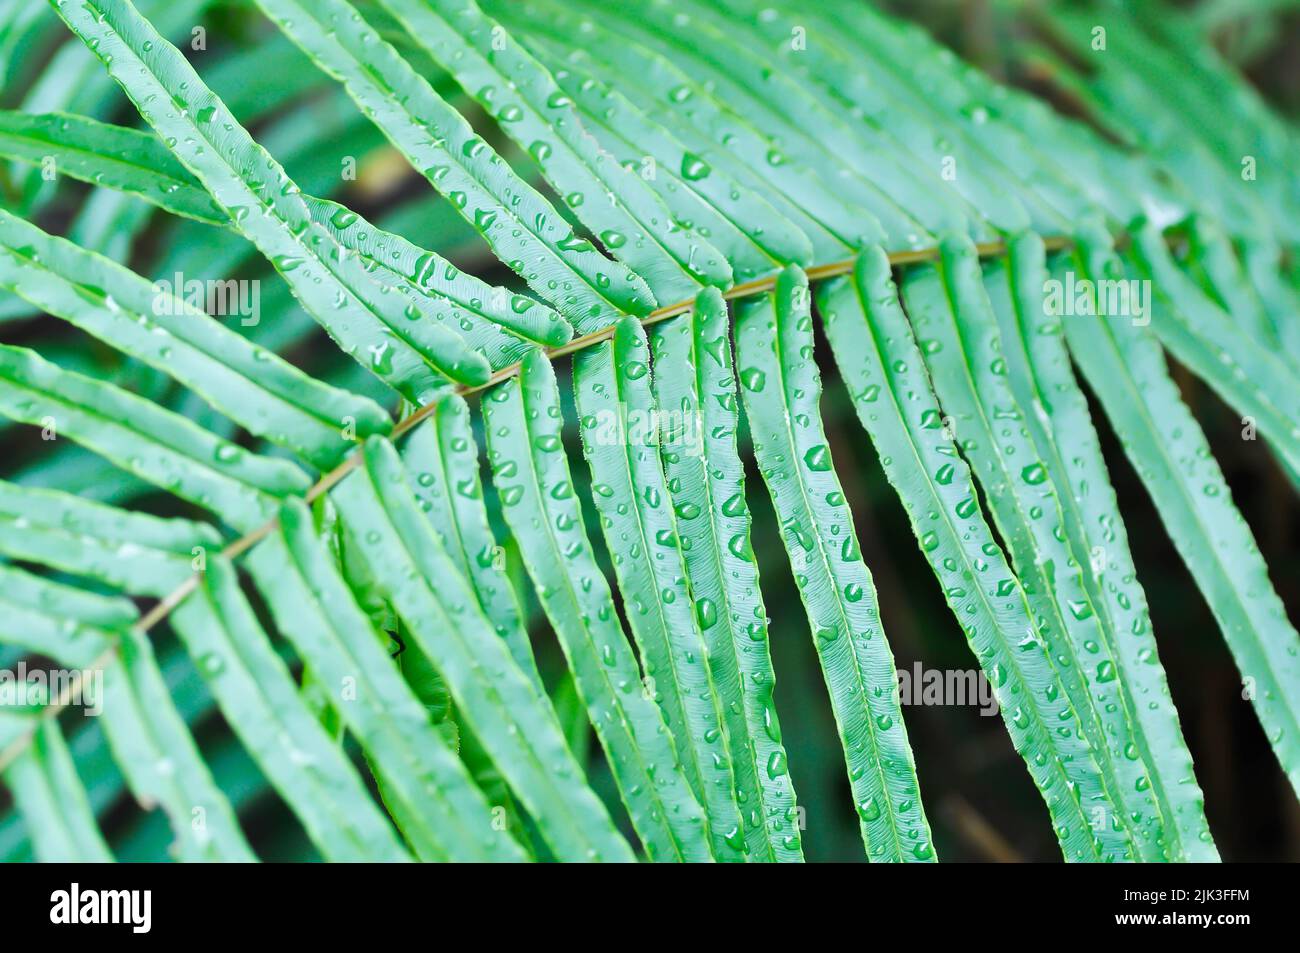 Pteris vittataPteris vittata or Pteris vittata L or fern , fern plant and rain drop on the leaf Stock Photo